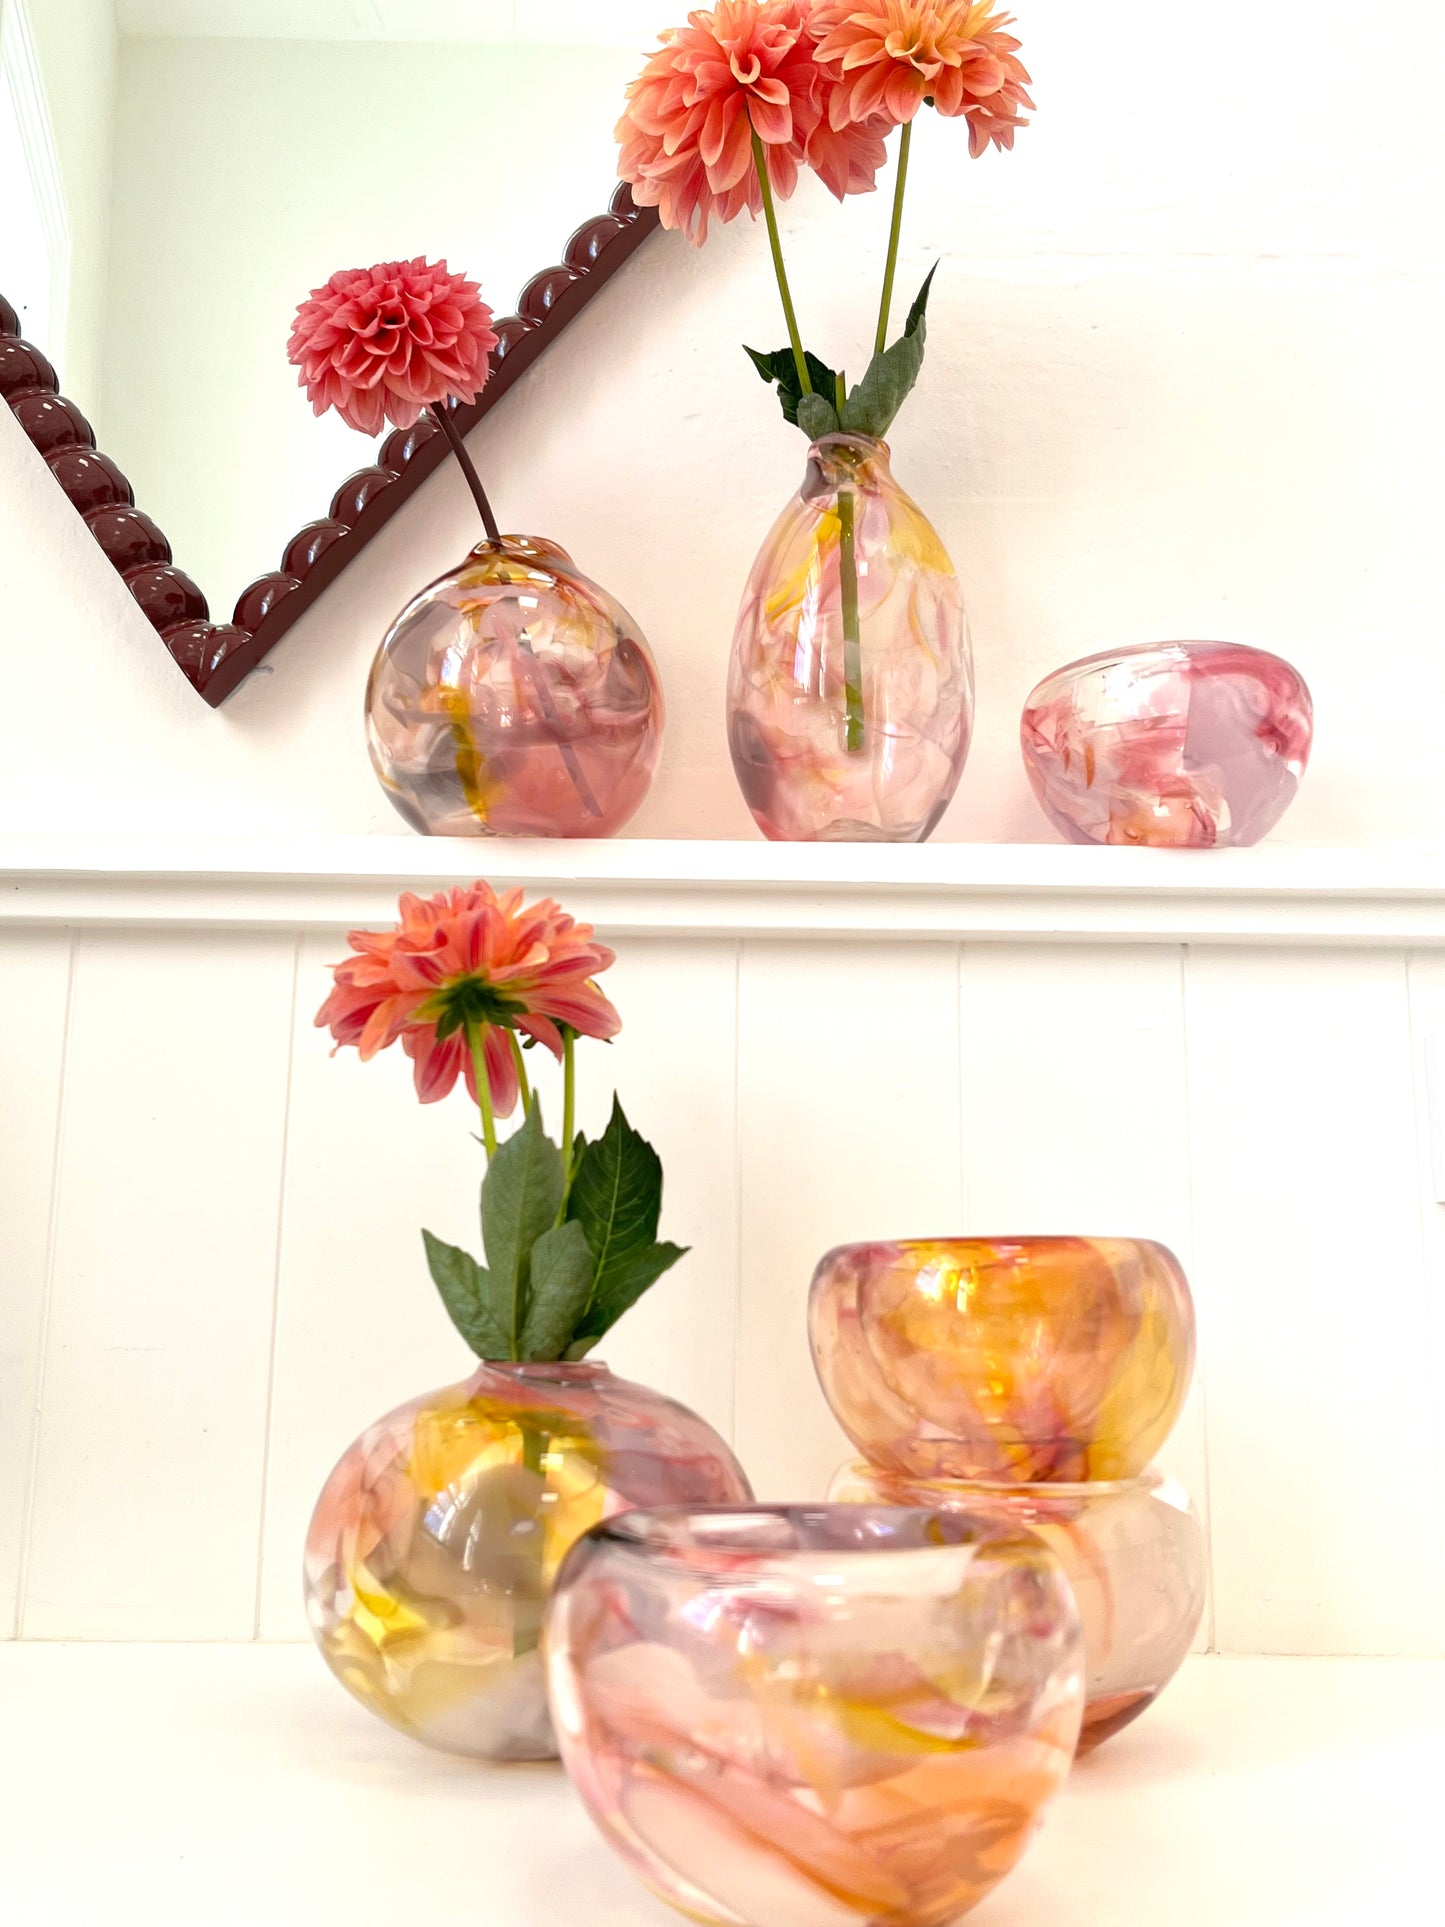 Handblown Glass Vase - Pink, Yellow Marble #3